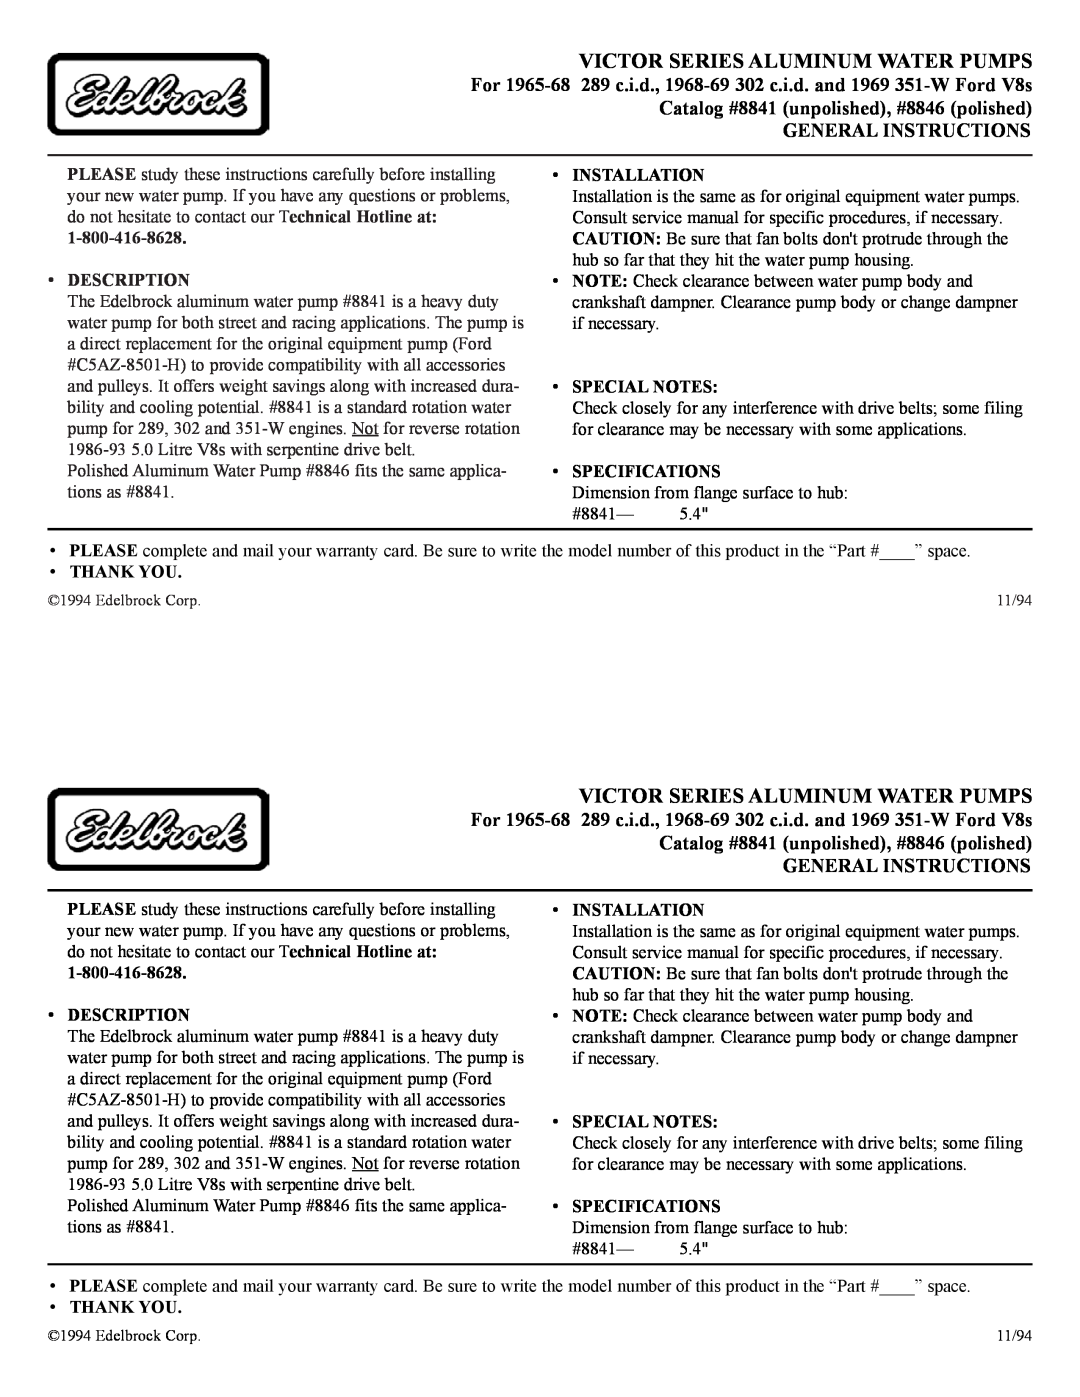 Edelbrock 1968-69 service manual Victor Series Aluminum Water Pumps, General Instructions, Description, Installation 